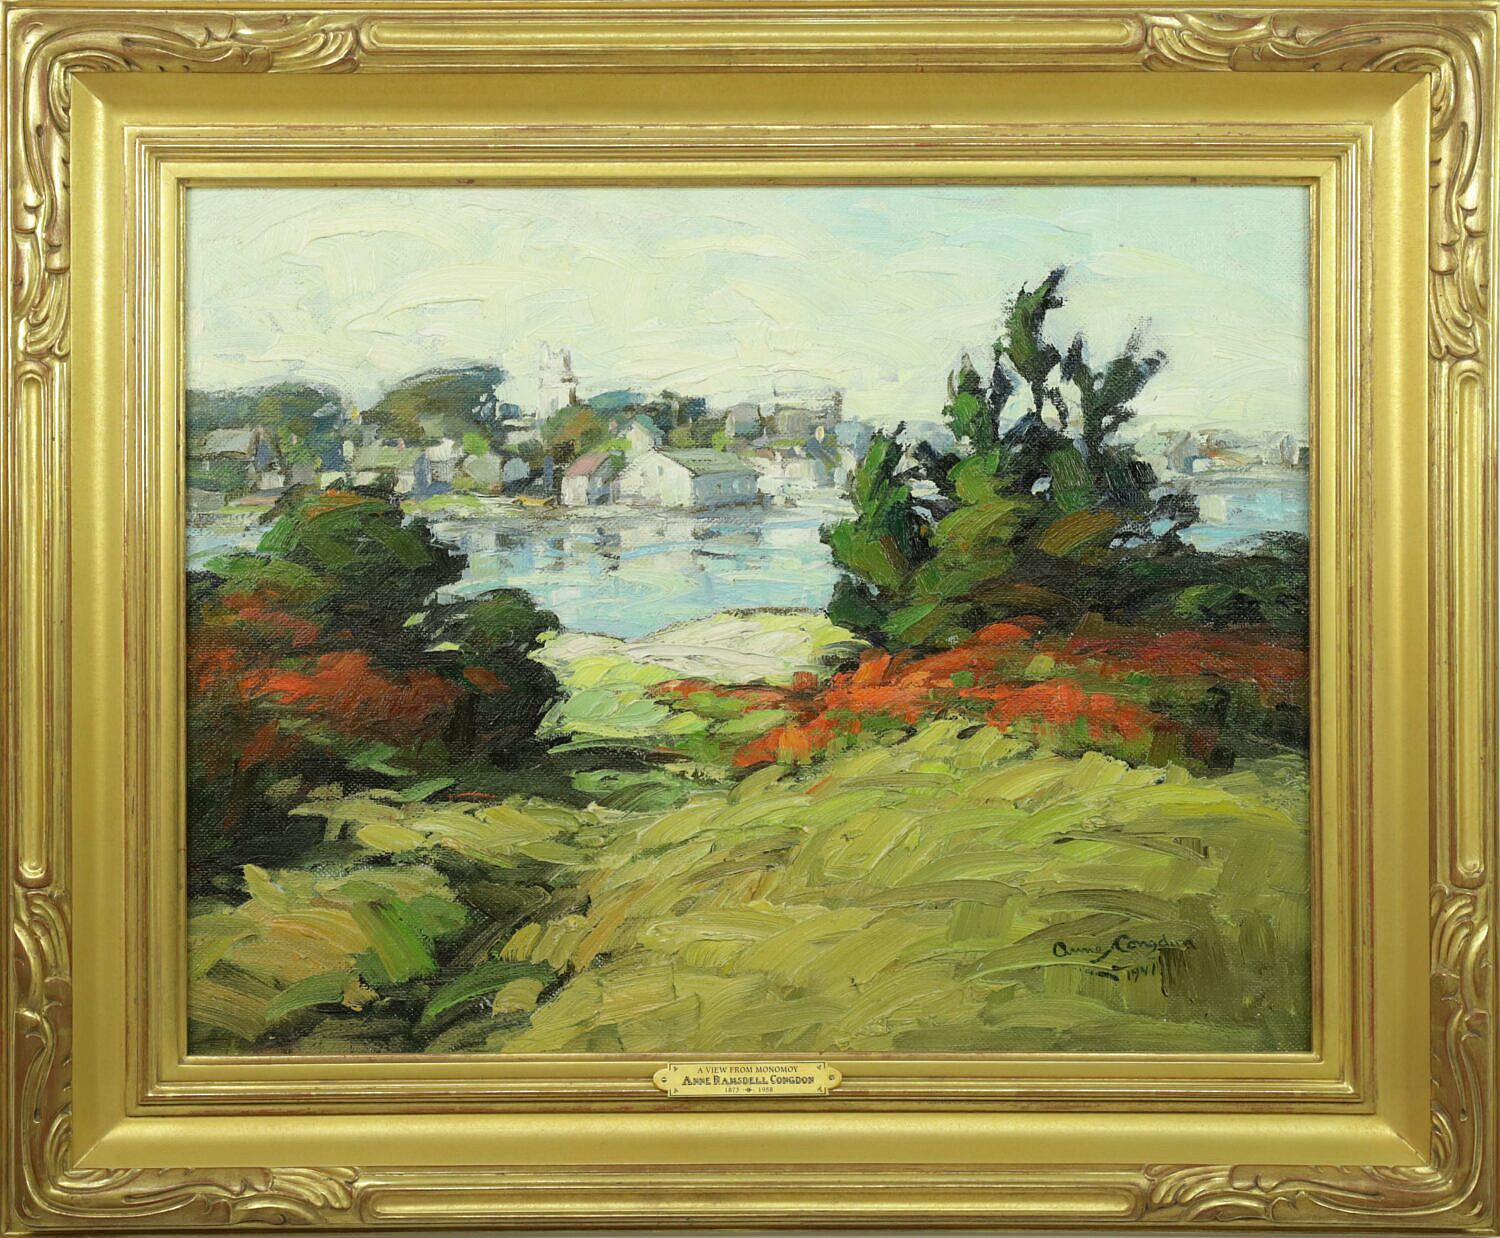 Anne Ramsdell Congdon Nantucket landscape, est. $60,000-$80,000